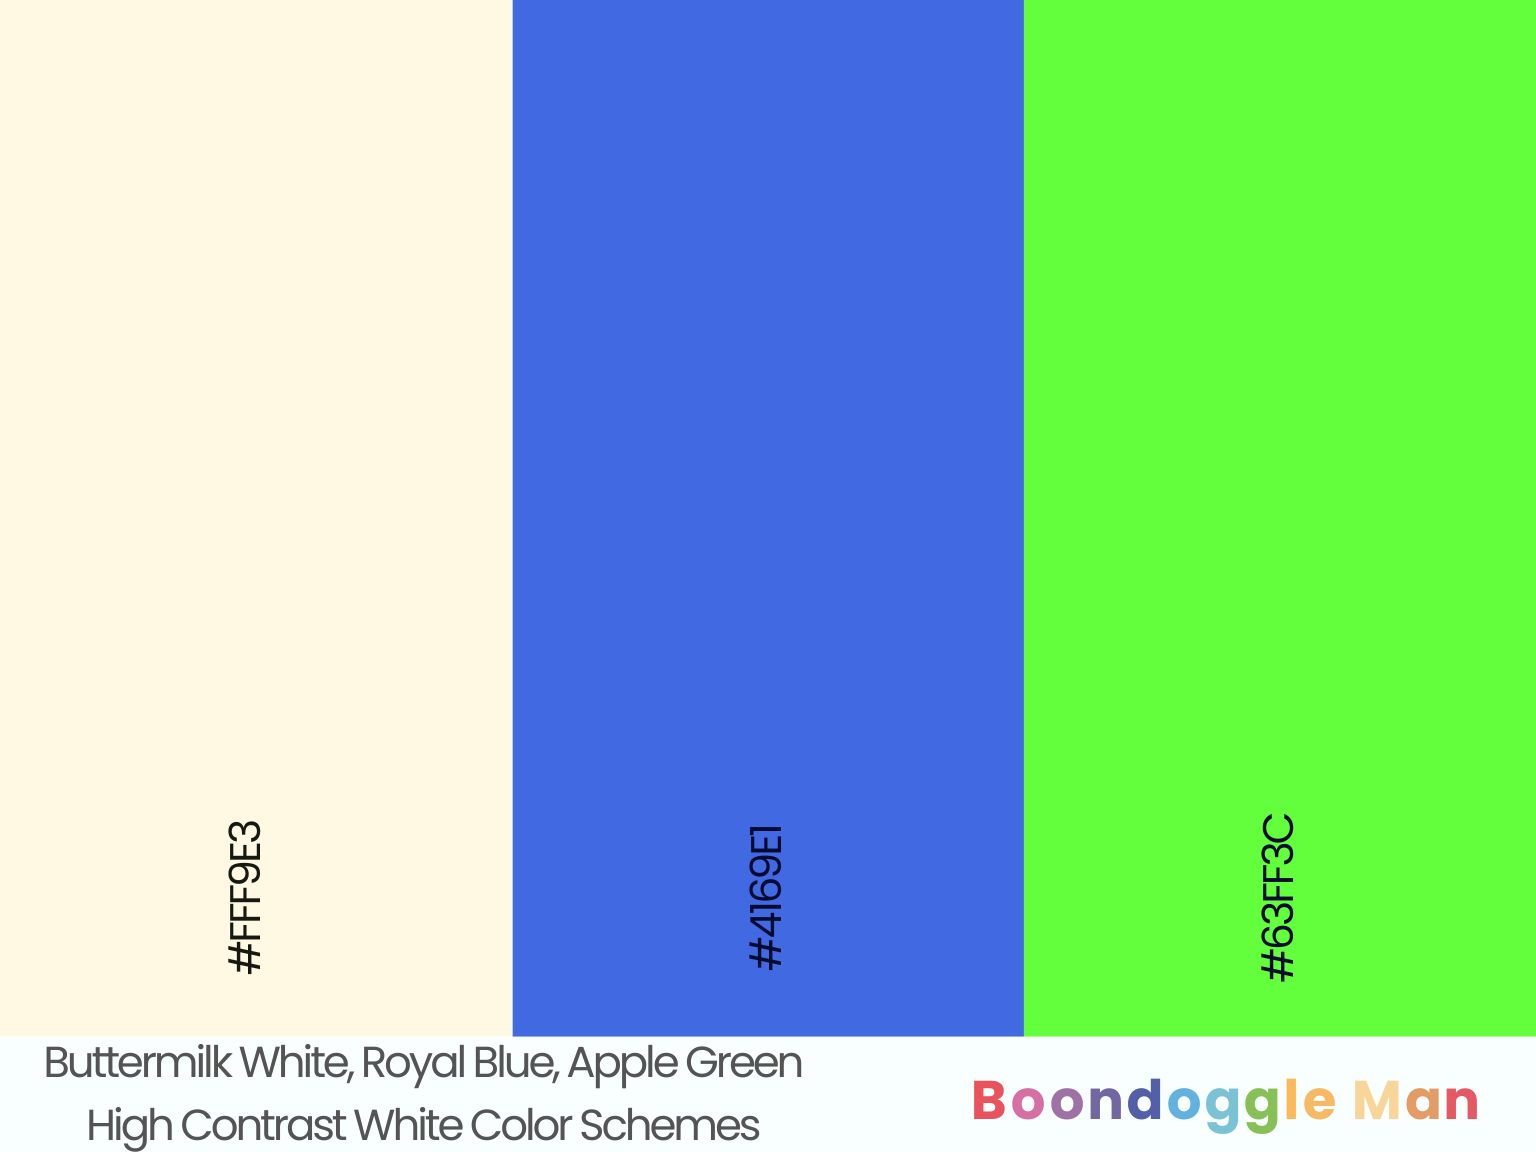 Buttermilk White, Royal Blue, Apple Green